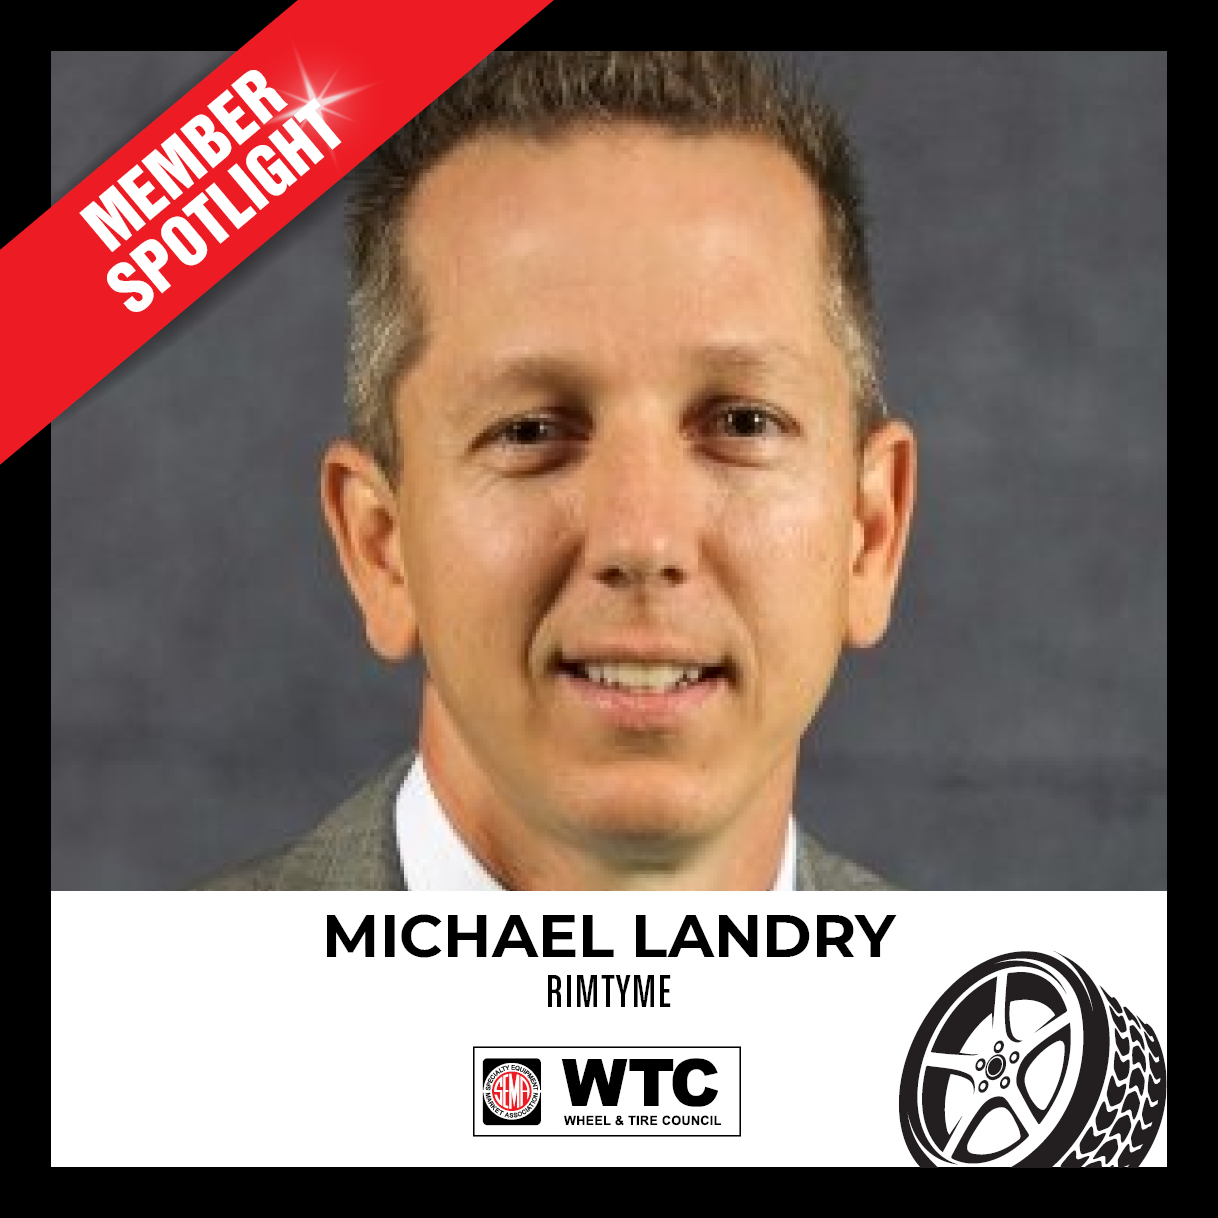 WTC Member Spotlight - Michael Landry